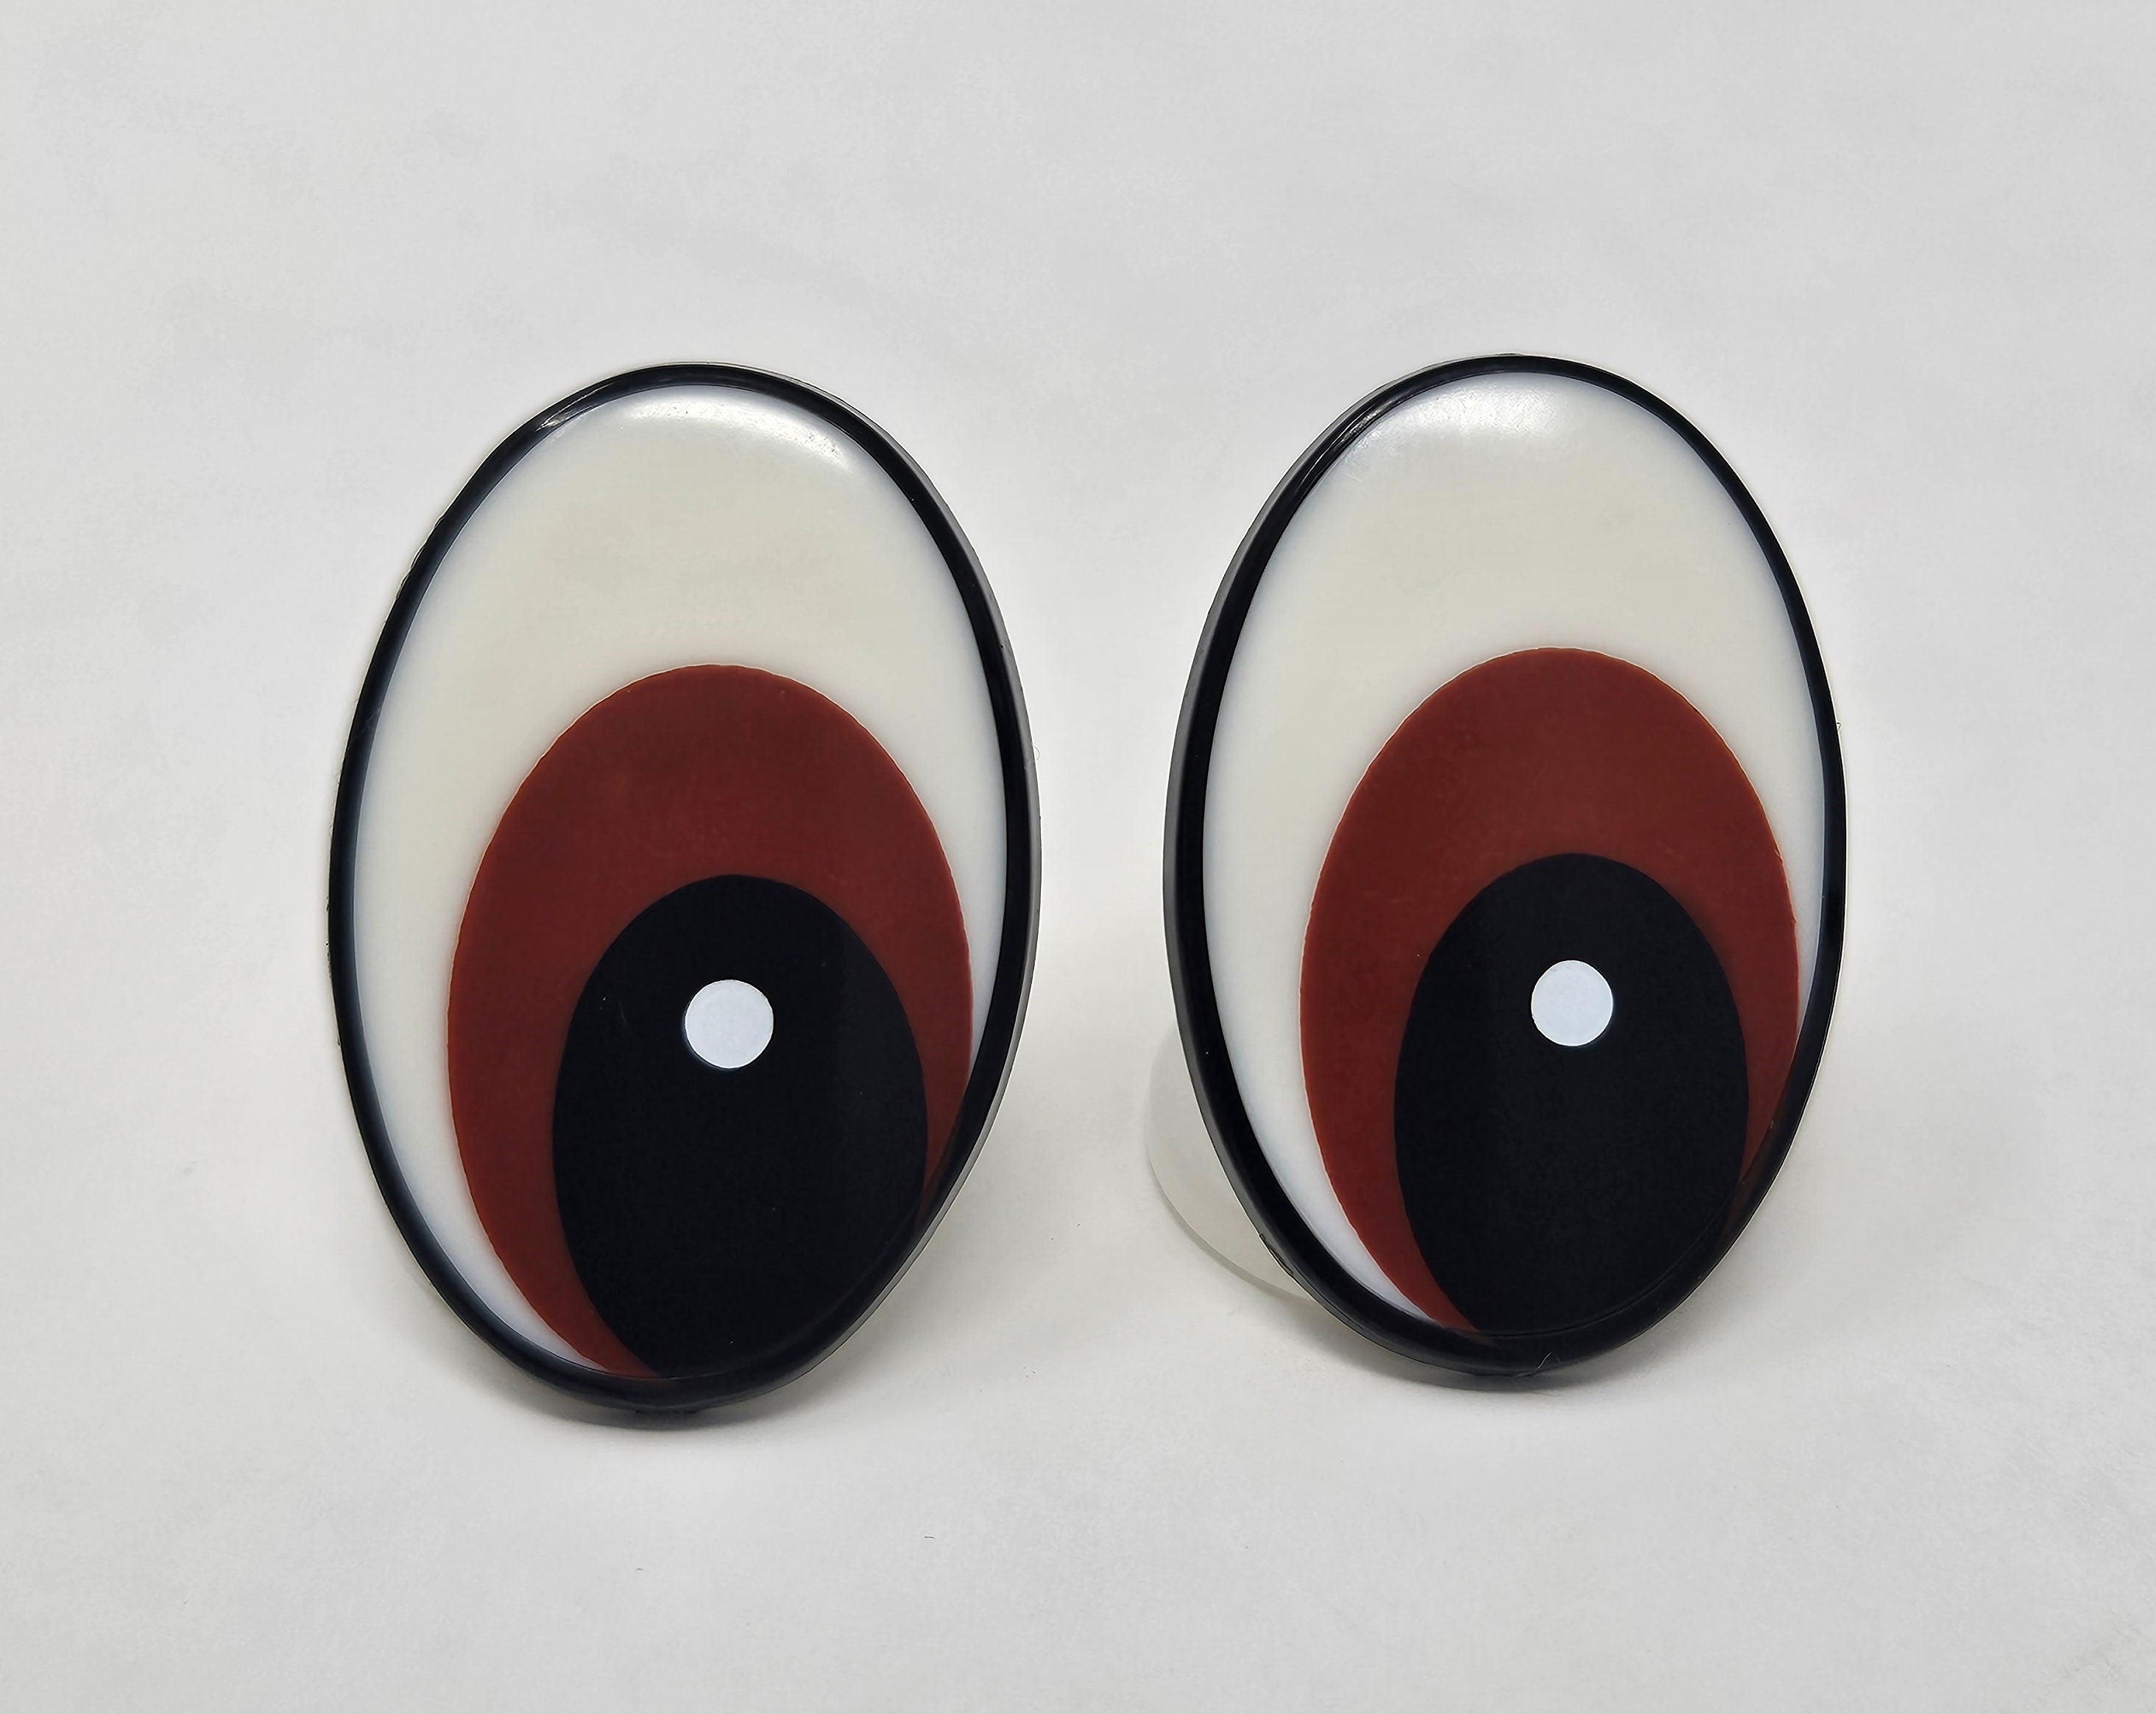 Hanru 200pcs Kawaii Safety Eyes, 5 Sizes Craft Eyes Black Stuffed